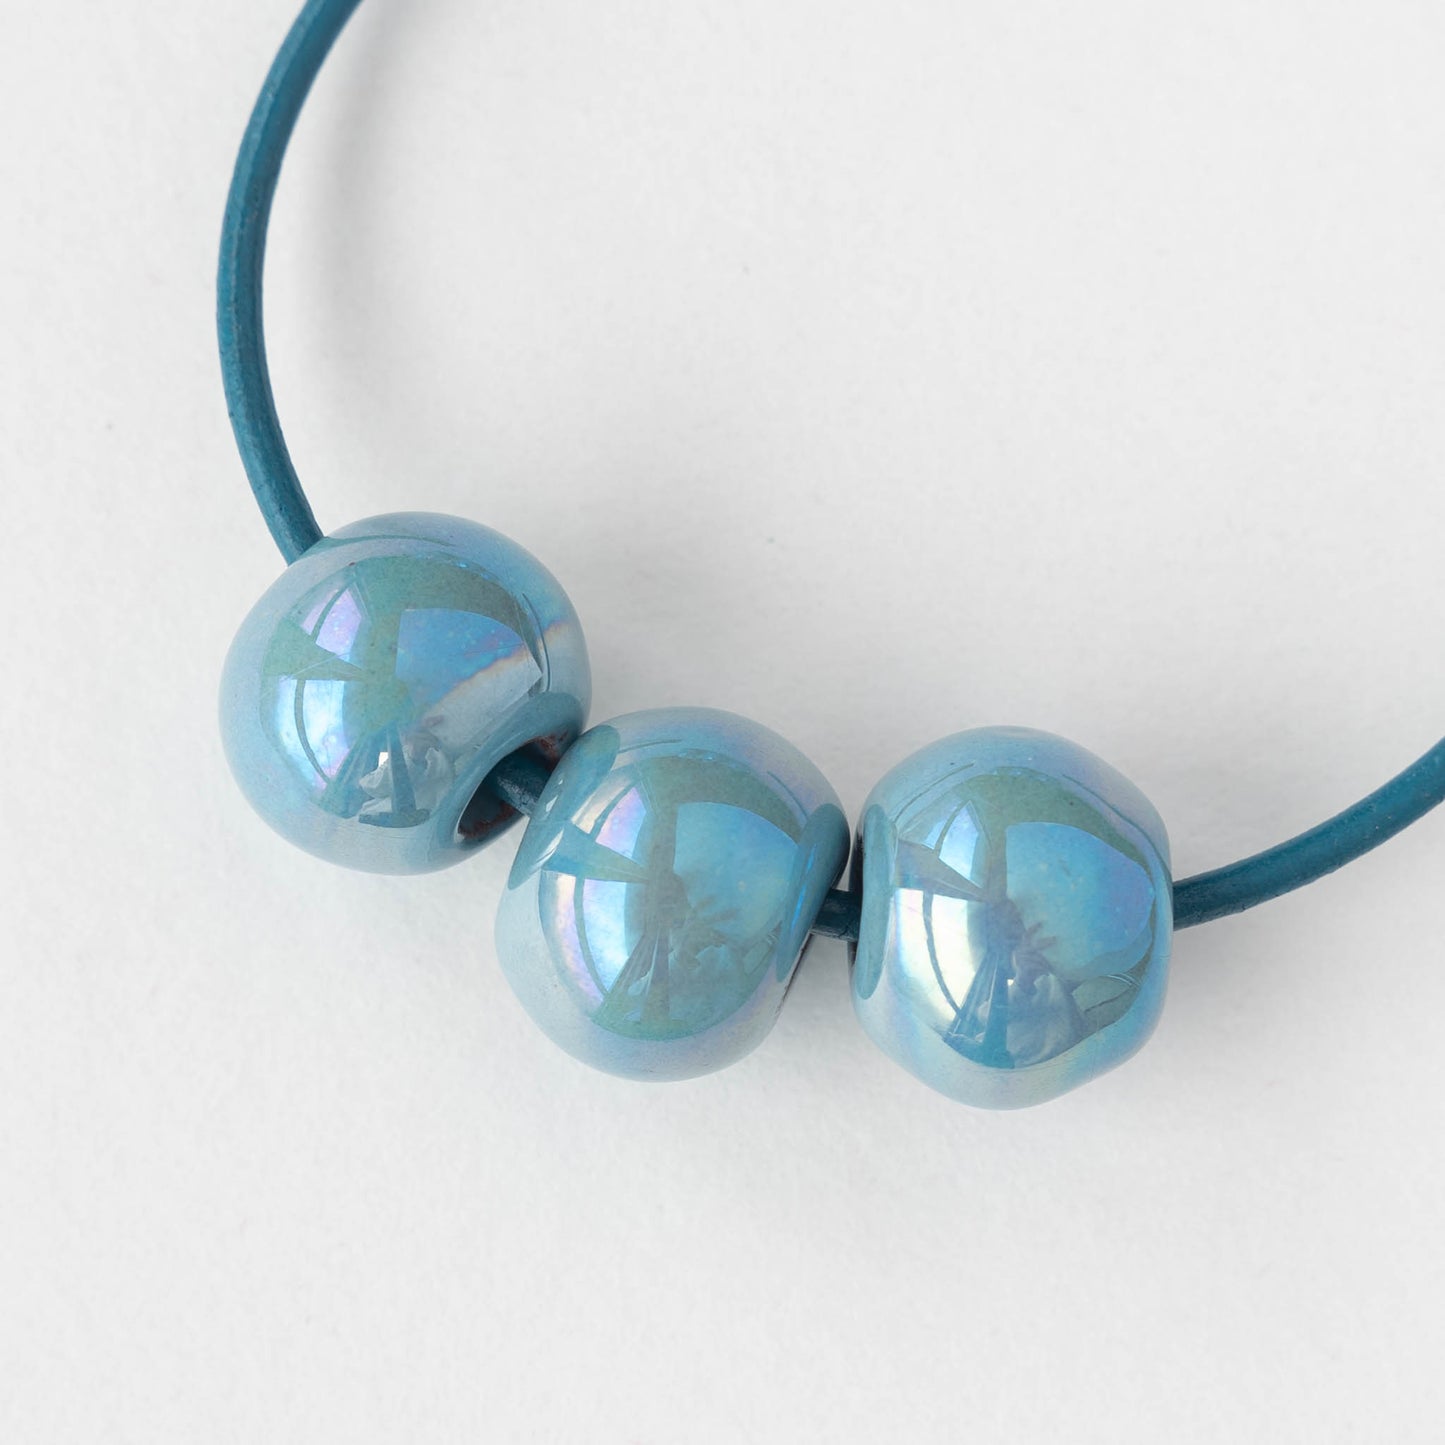 16mm Glazed Ceramic Round Beads - Iridescent lt. Blue - 4 or 12